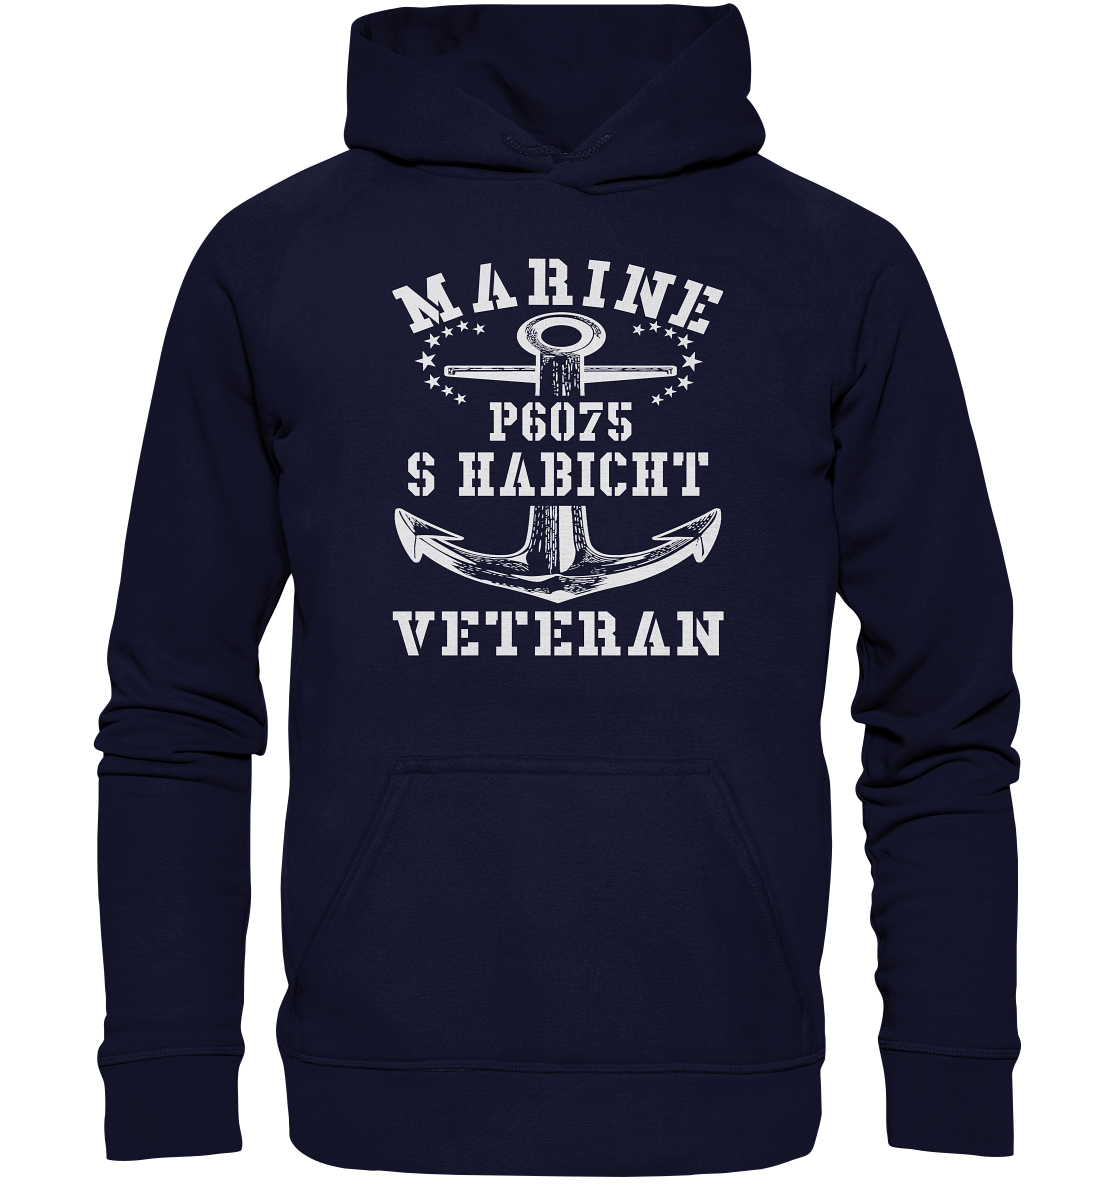 P6075 S HABICHT Marine Veteran - Basic Unisex Hoodie